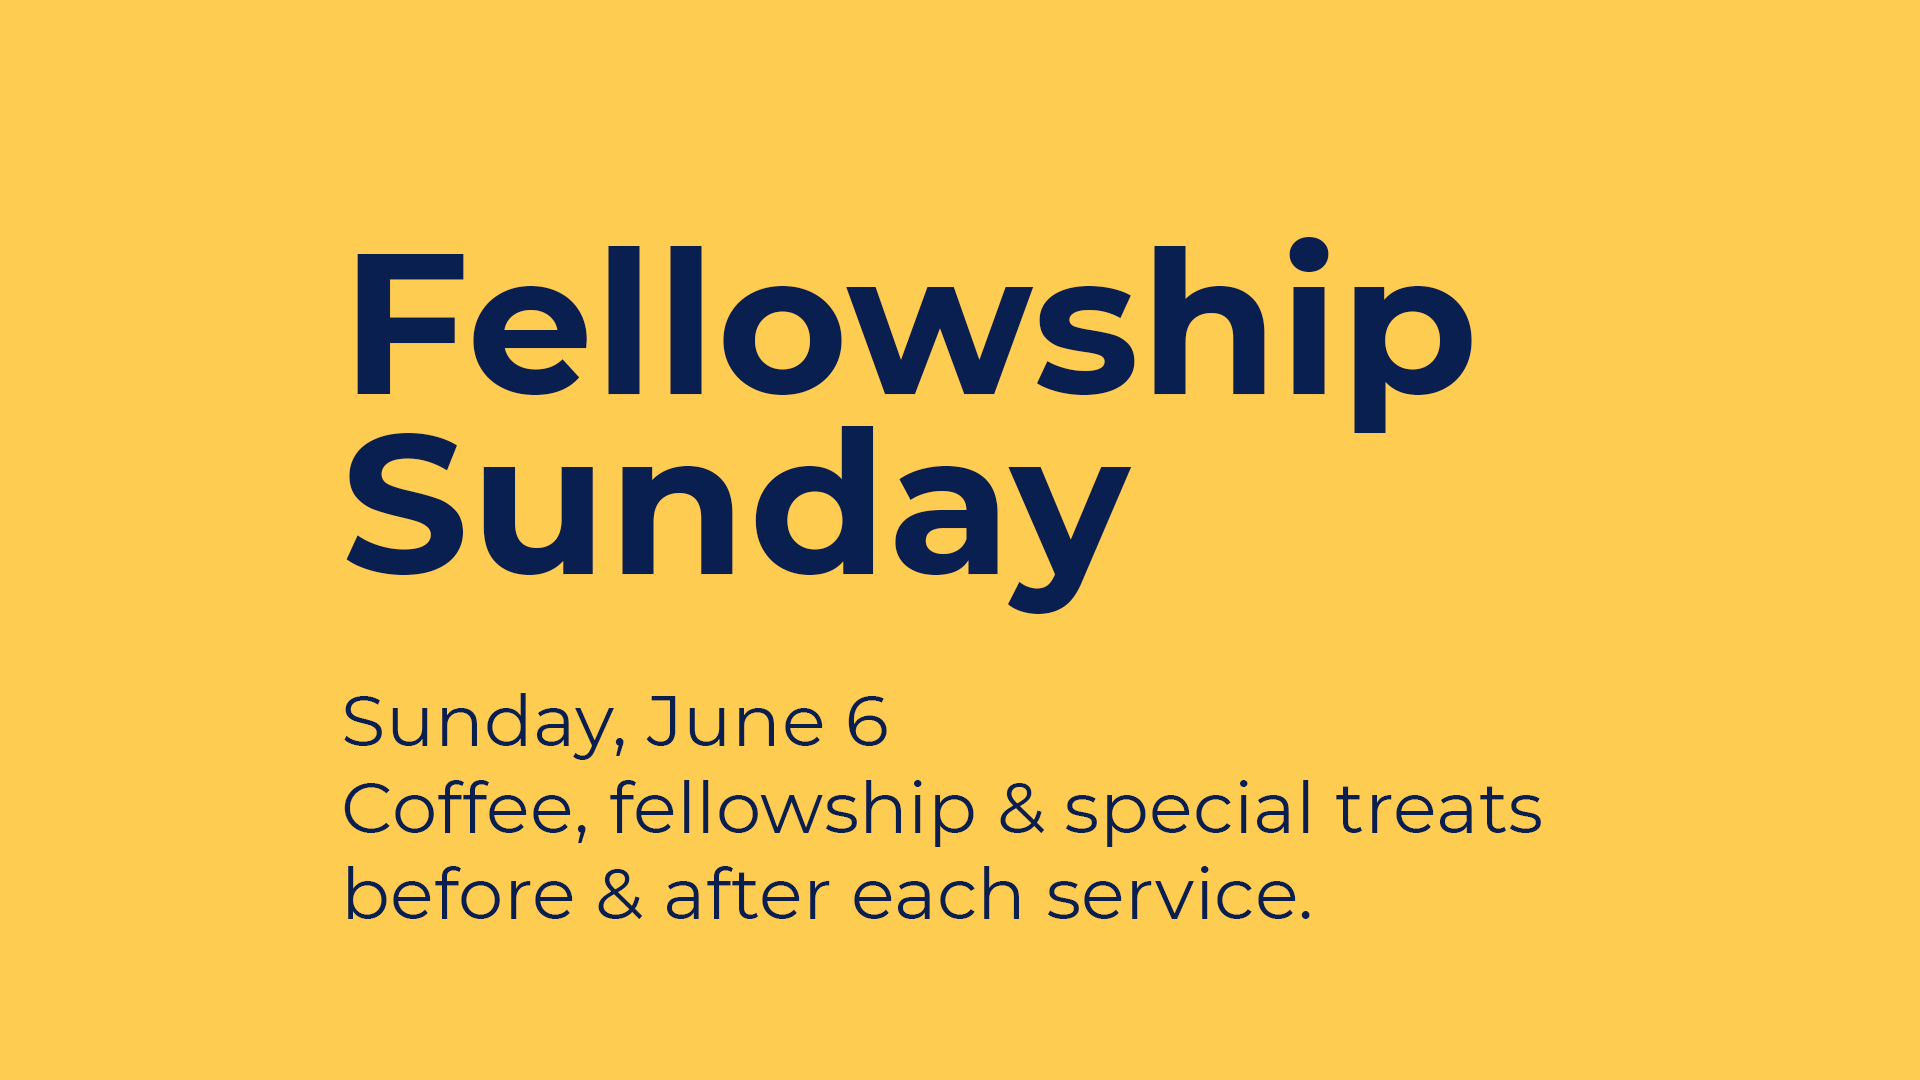 Fellowship Sunday